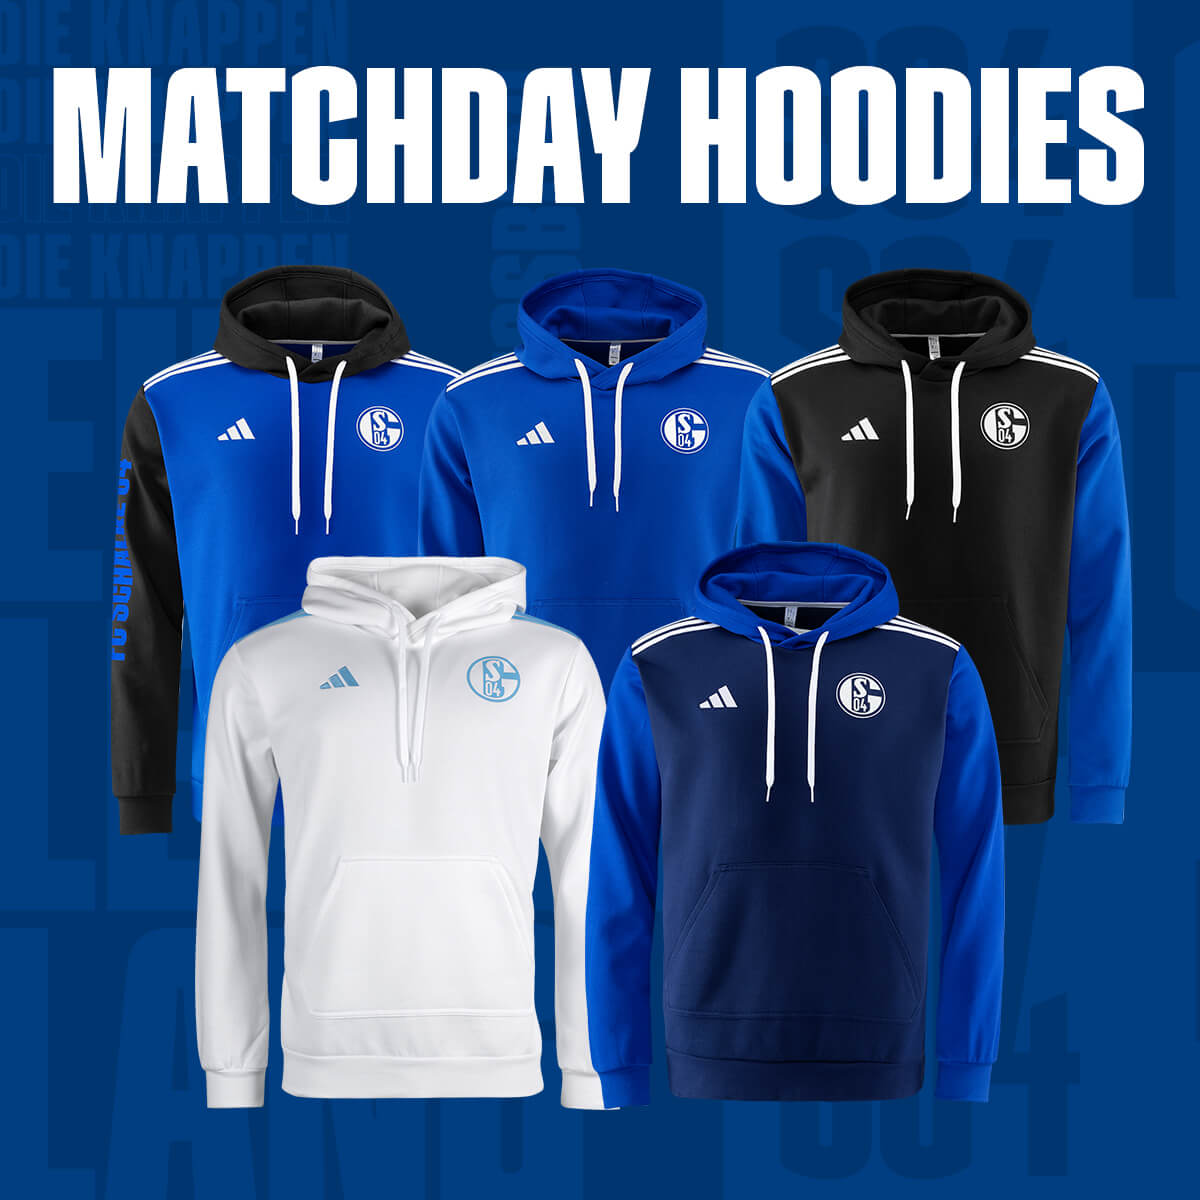 Matchday hoodies adidas FC Schalke 04